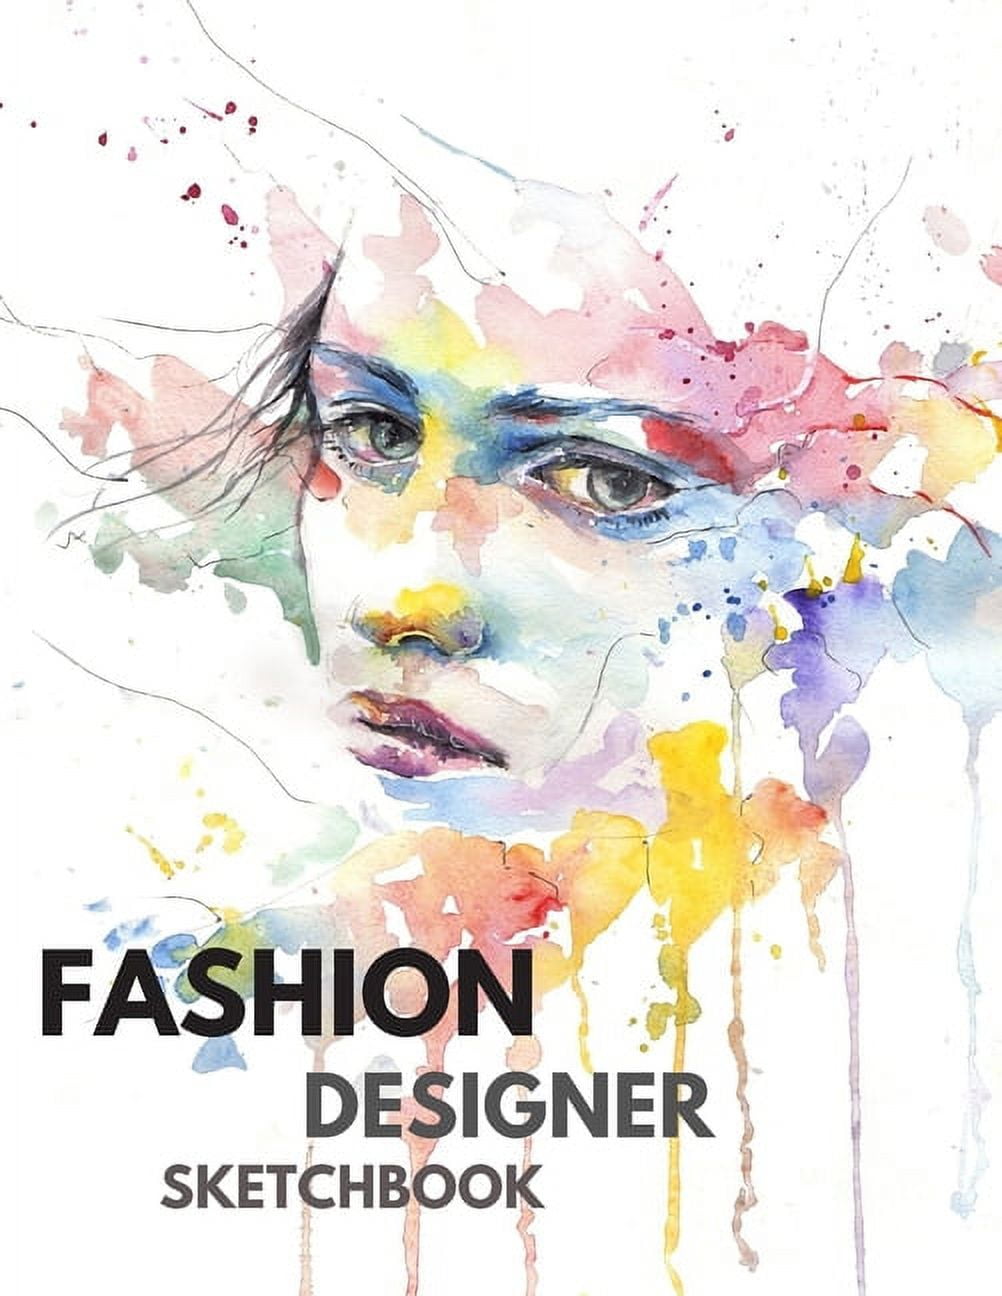 Fashion Designer Sketchbook: 264 Figure Templates for Designing Looks (Drawing Books, Fashion Books, Fashion Design Books, Fashion Sketchbooks), Design & Build Your Pro Portfolio. [Book]